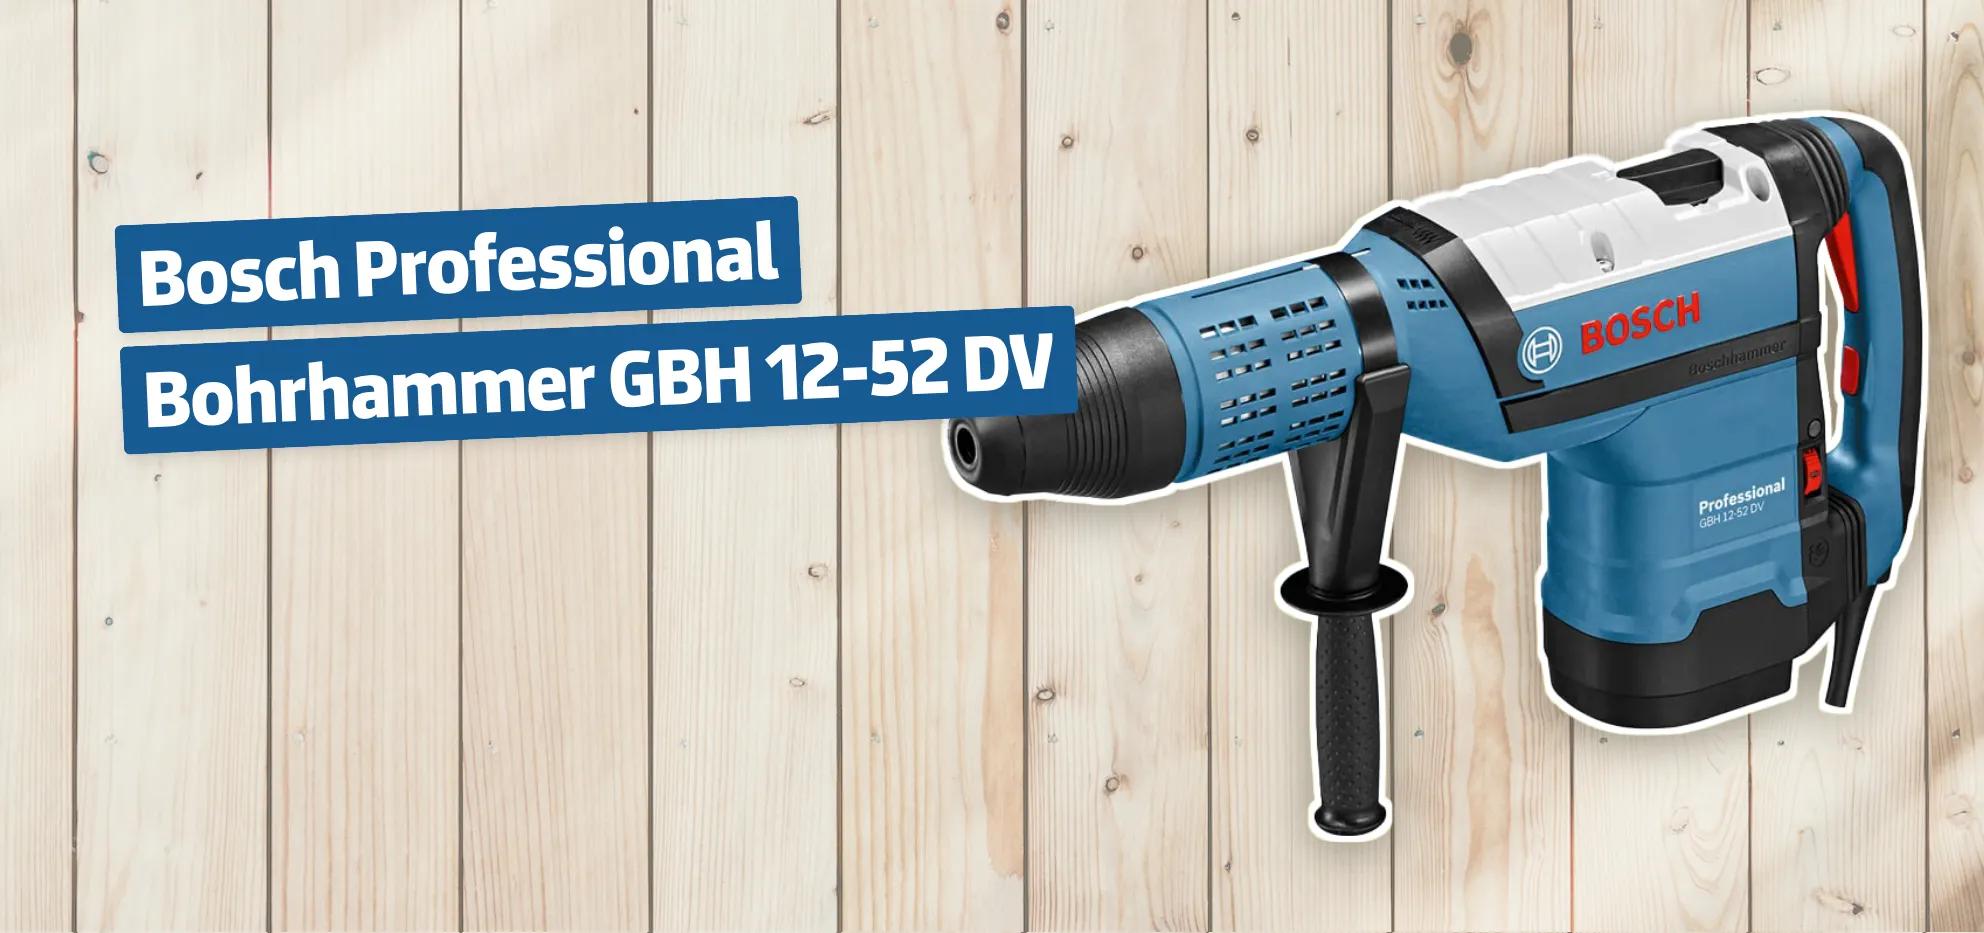 Bosch Professional Bohrhammer GBH 12-52 DV